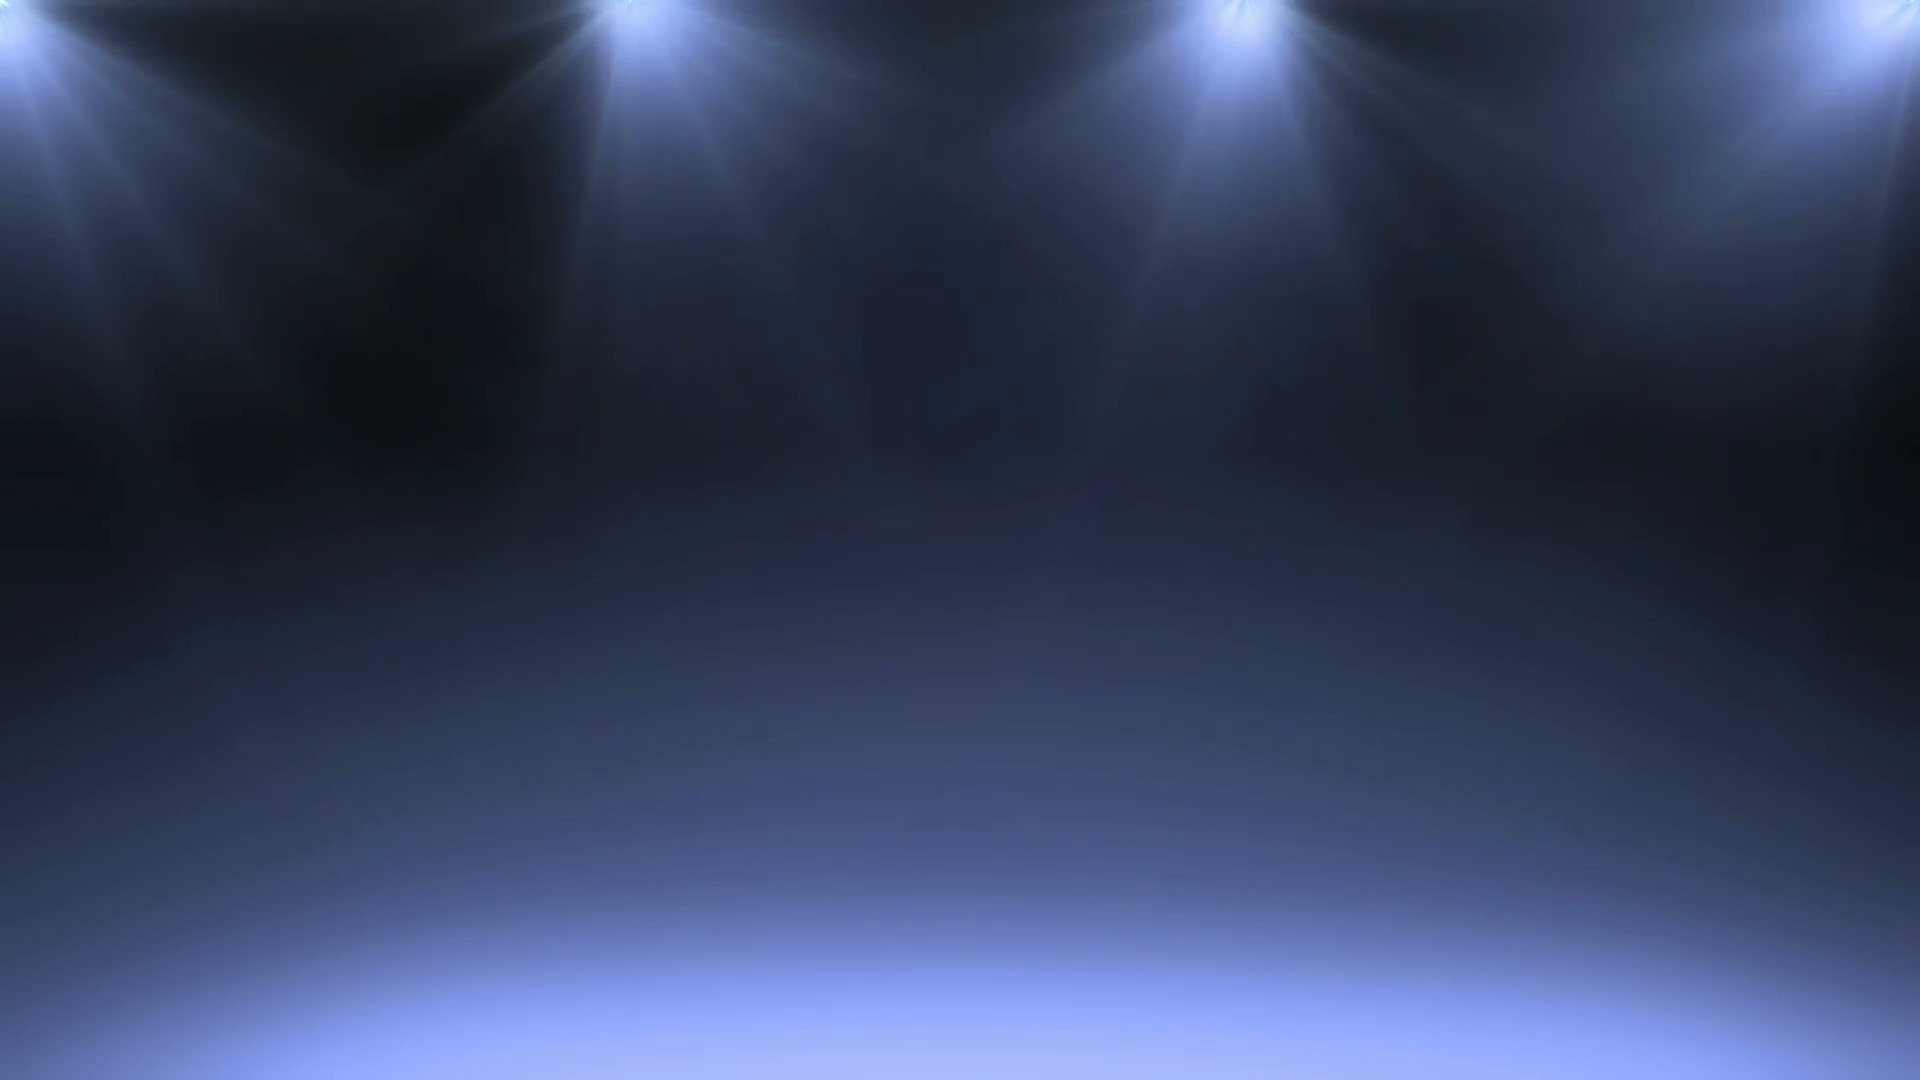 1920x1080 Animated Dark Blue Stage with Spotlights Background. Motion Background -  VideoBlocks